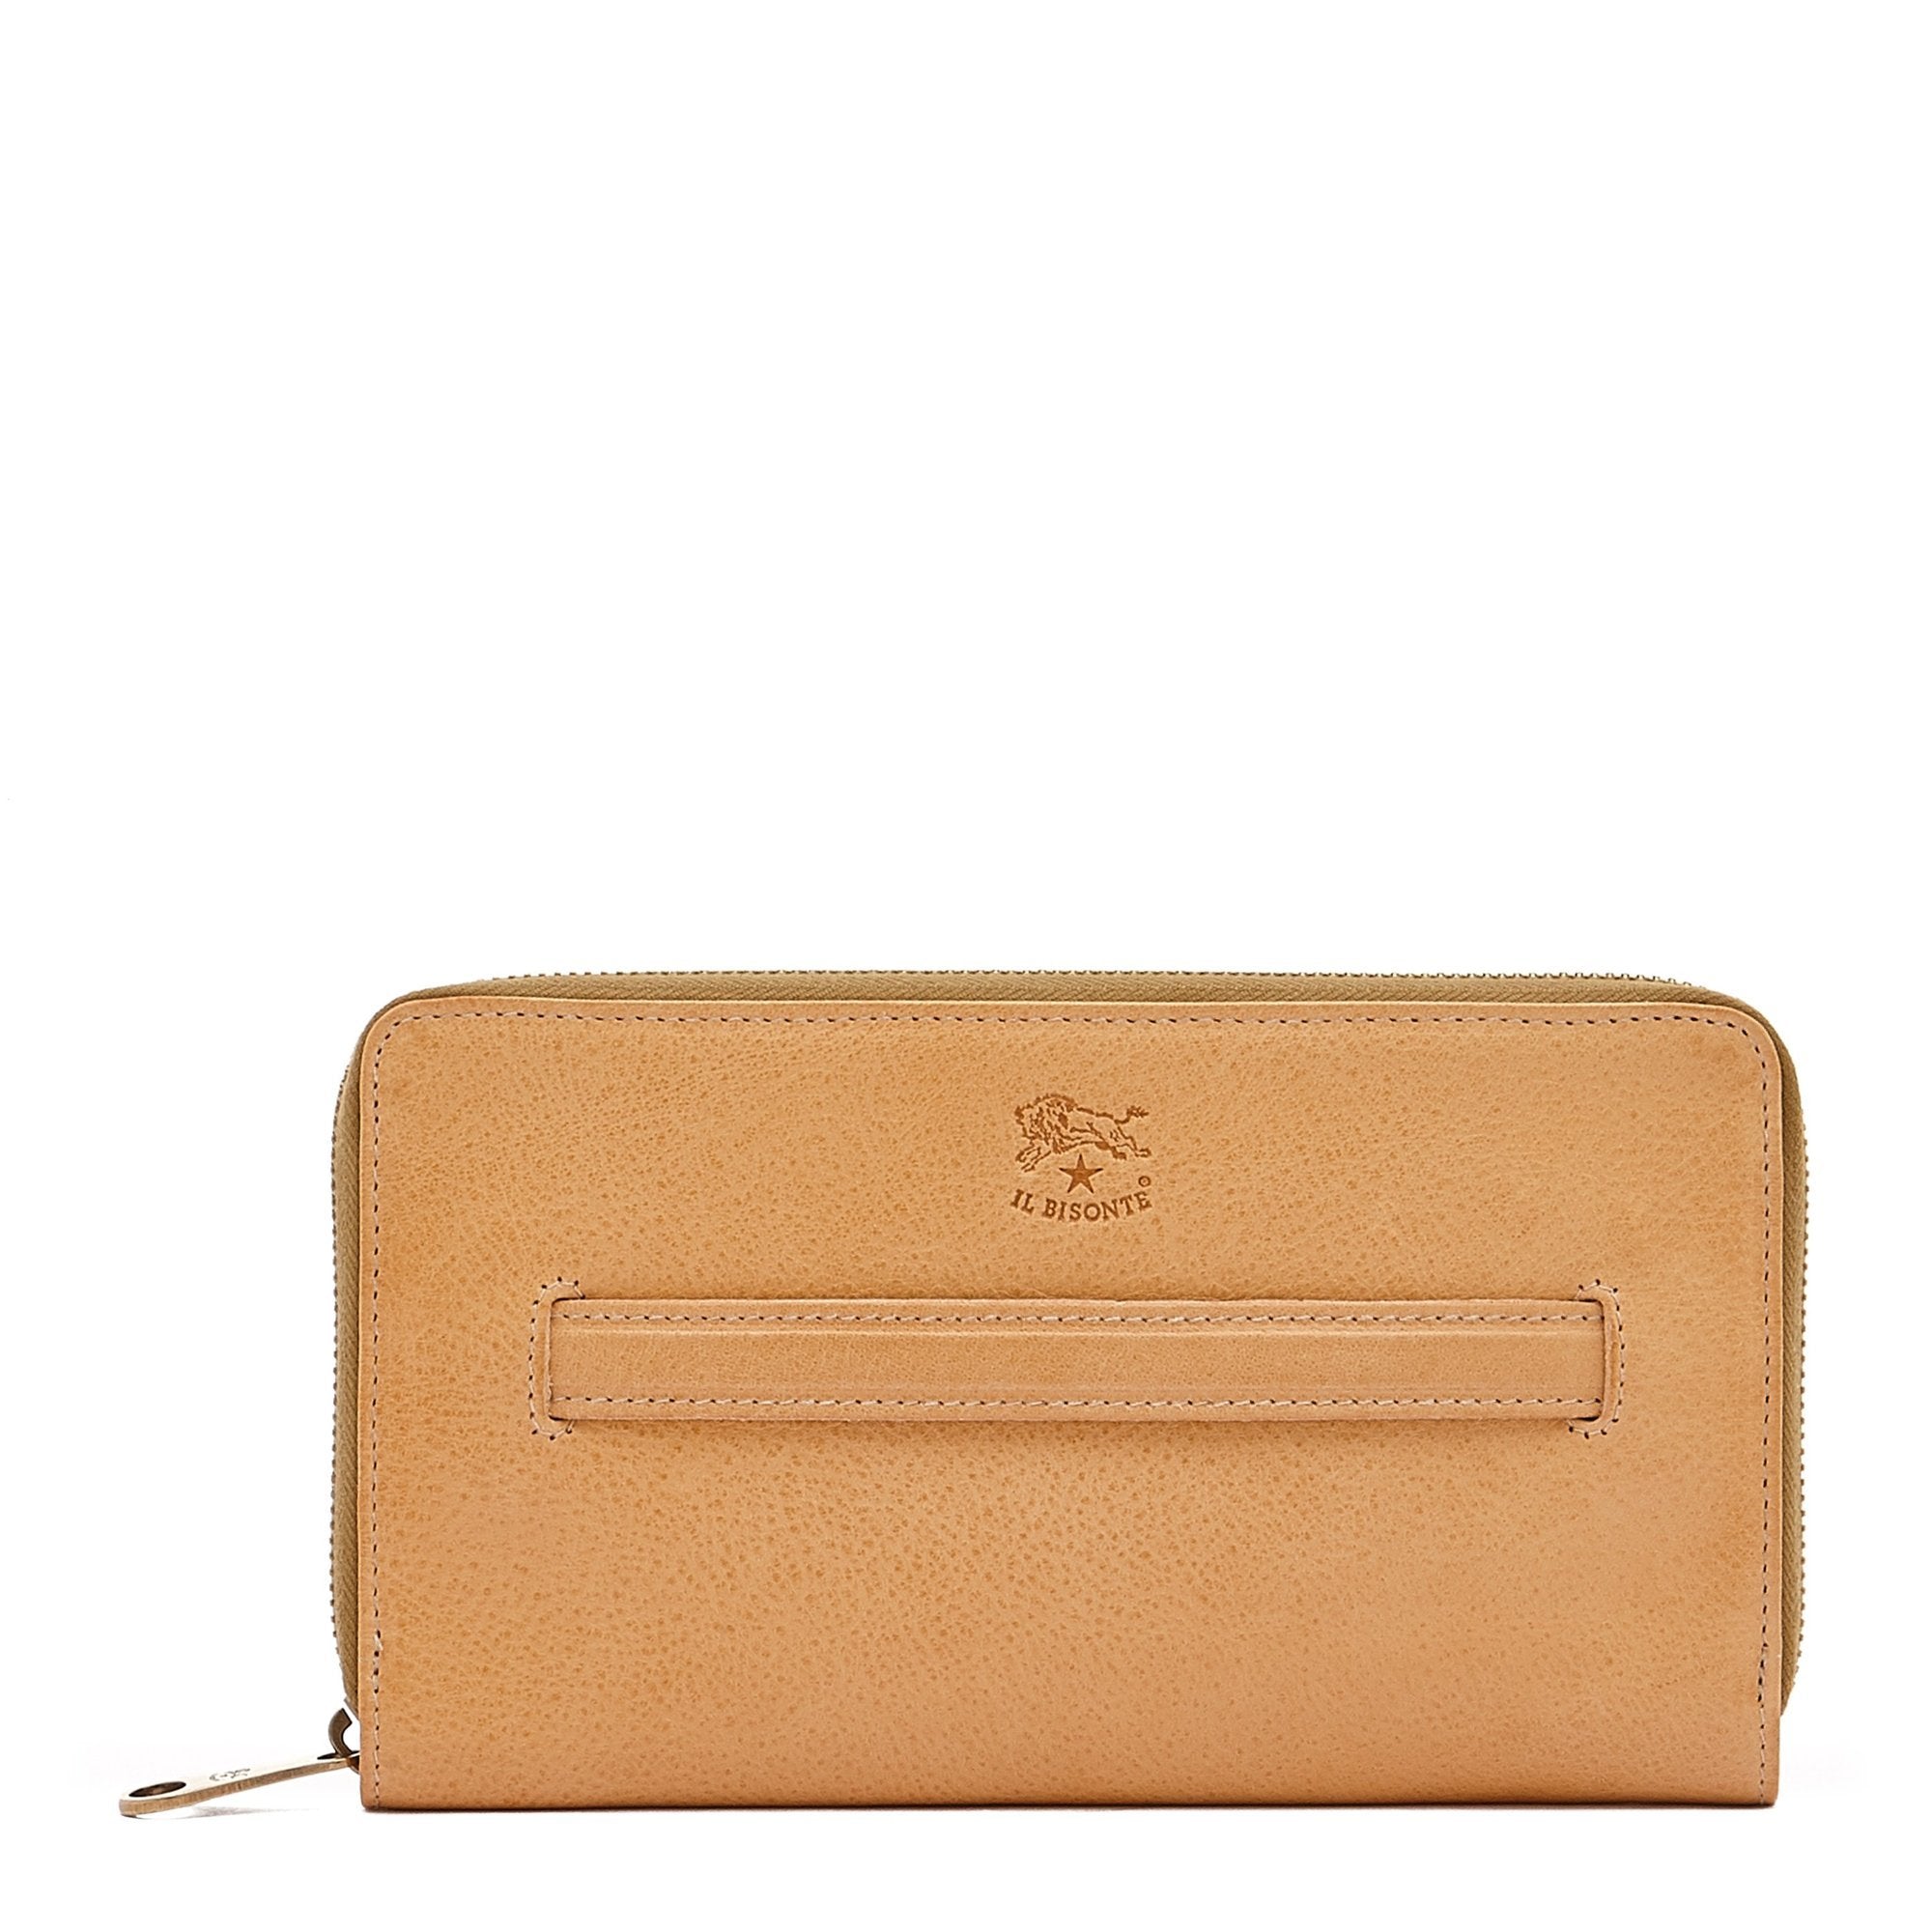 Salina | Women's zip around wallet in calf leather color natural